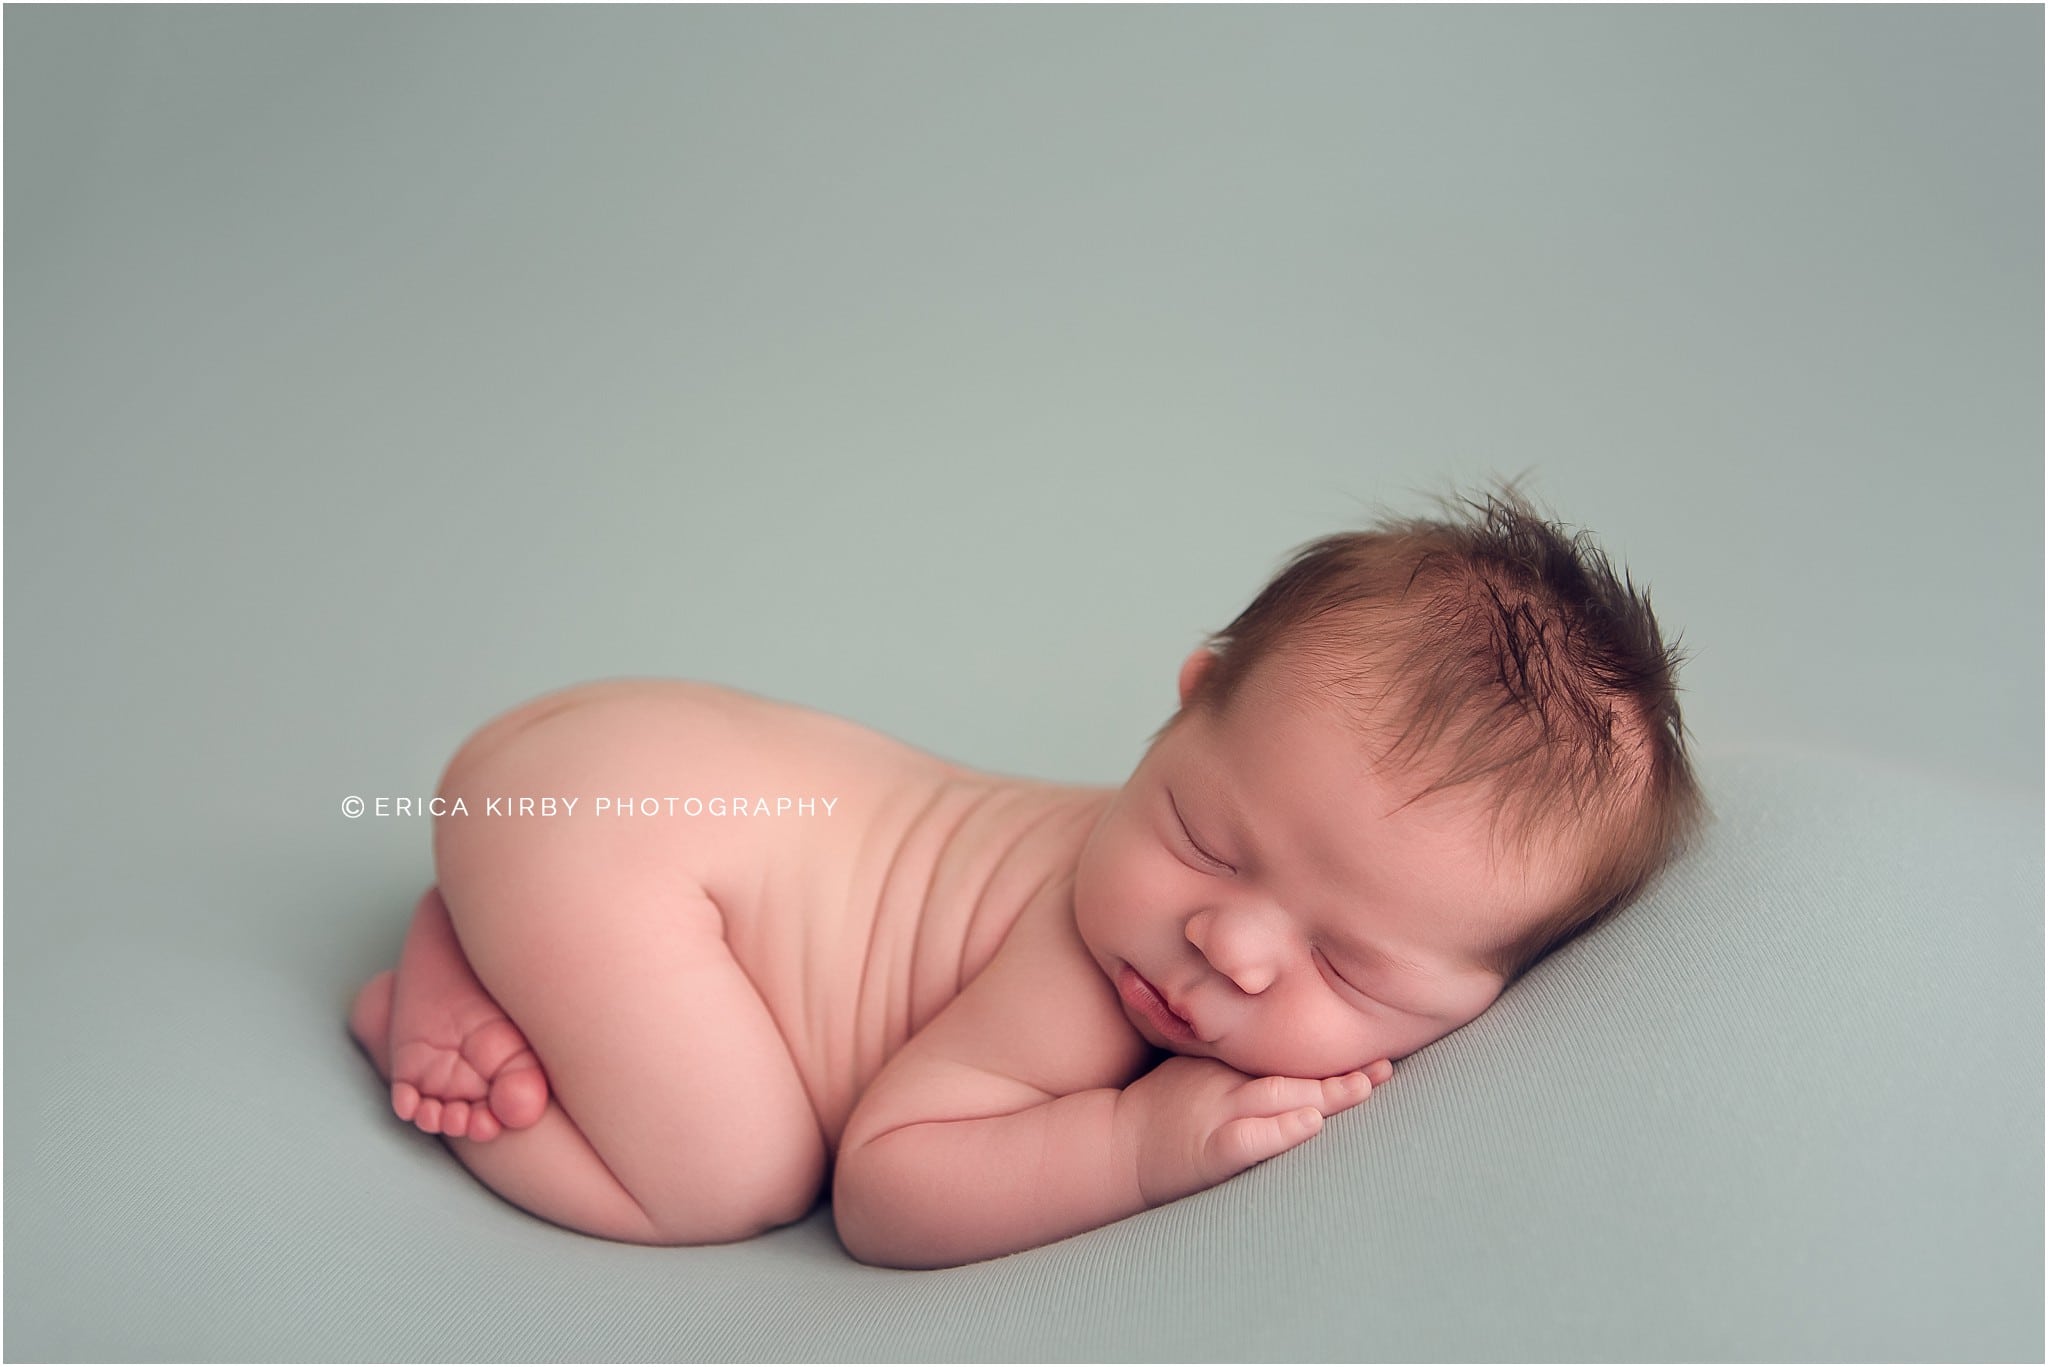 Newborn Photography NWA | Baby boy newborn photography session in Bentonville Arkansas | baby on blue background erica kirby photography